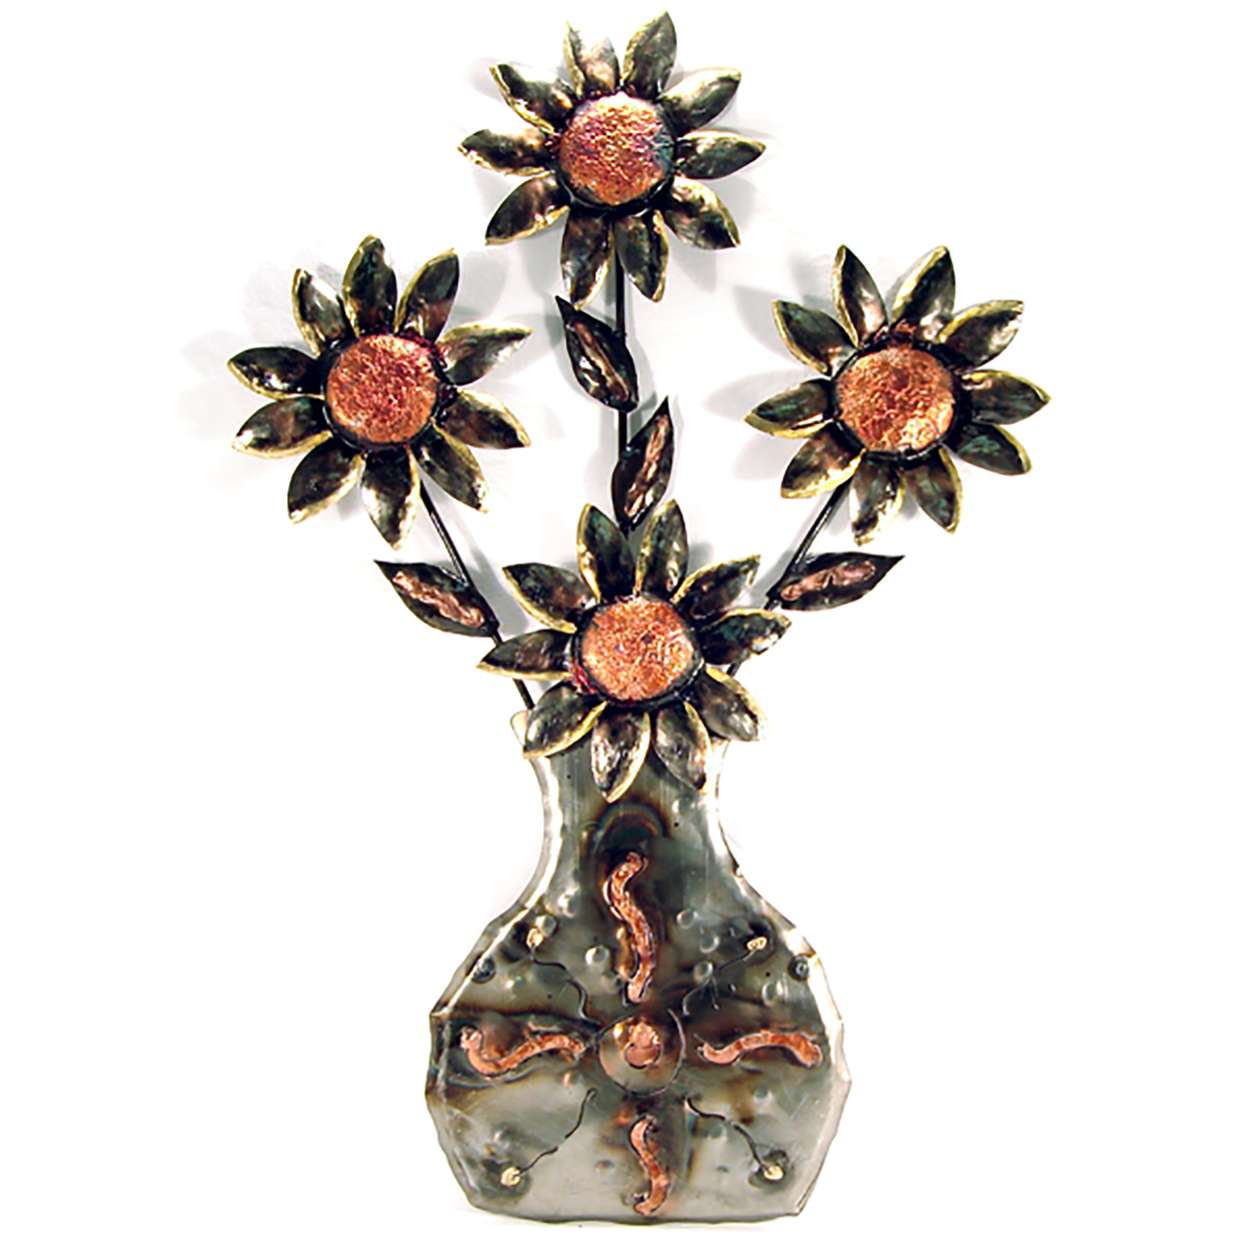 Copper Wall Art - Sunflowers in Vase